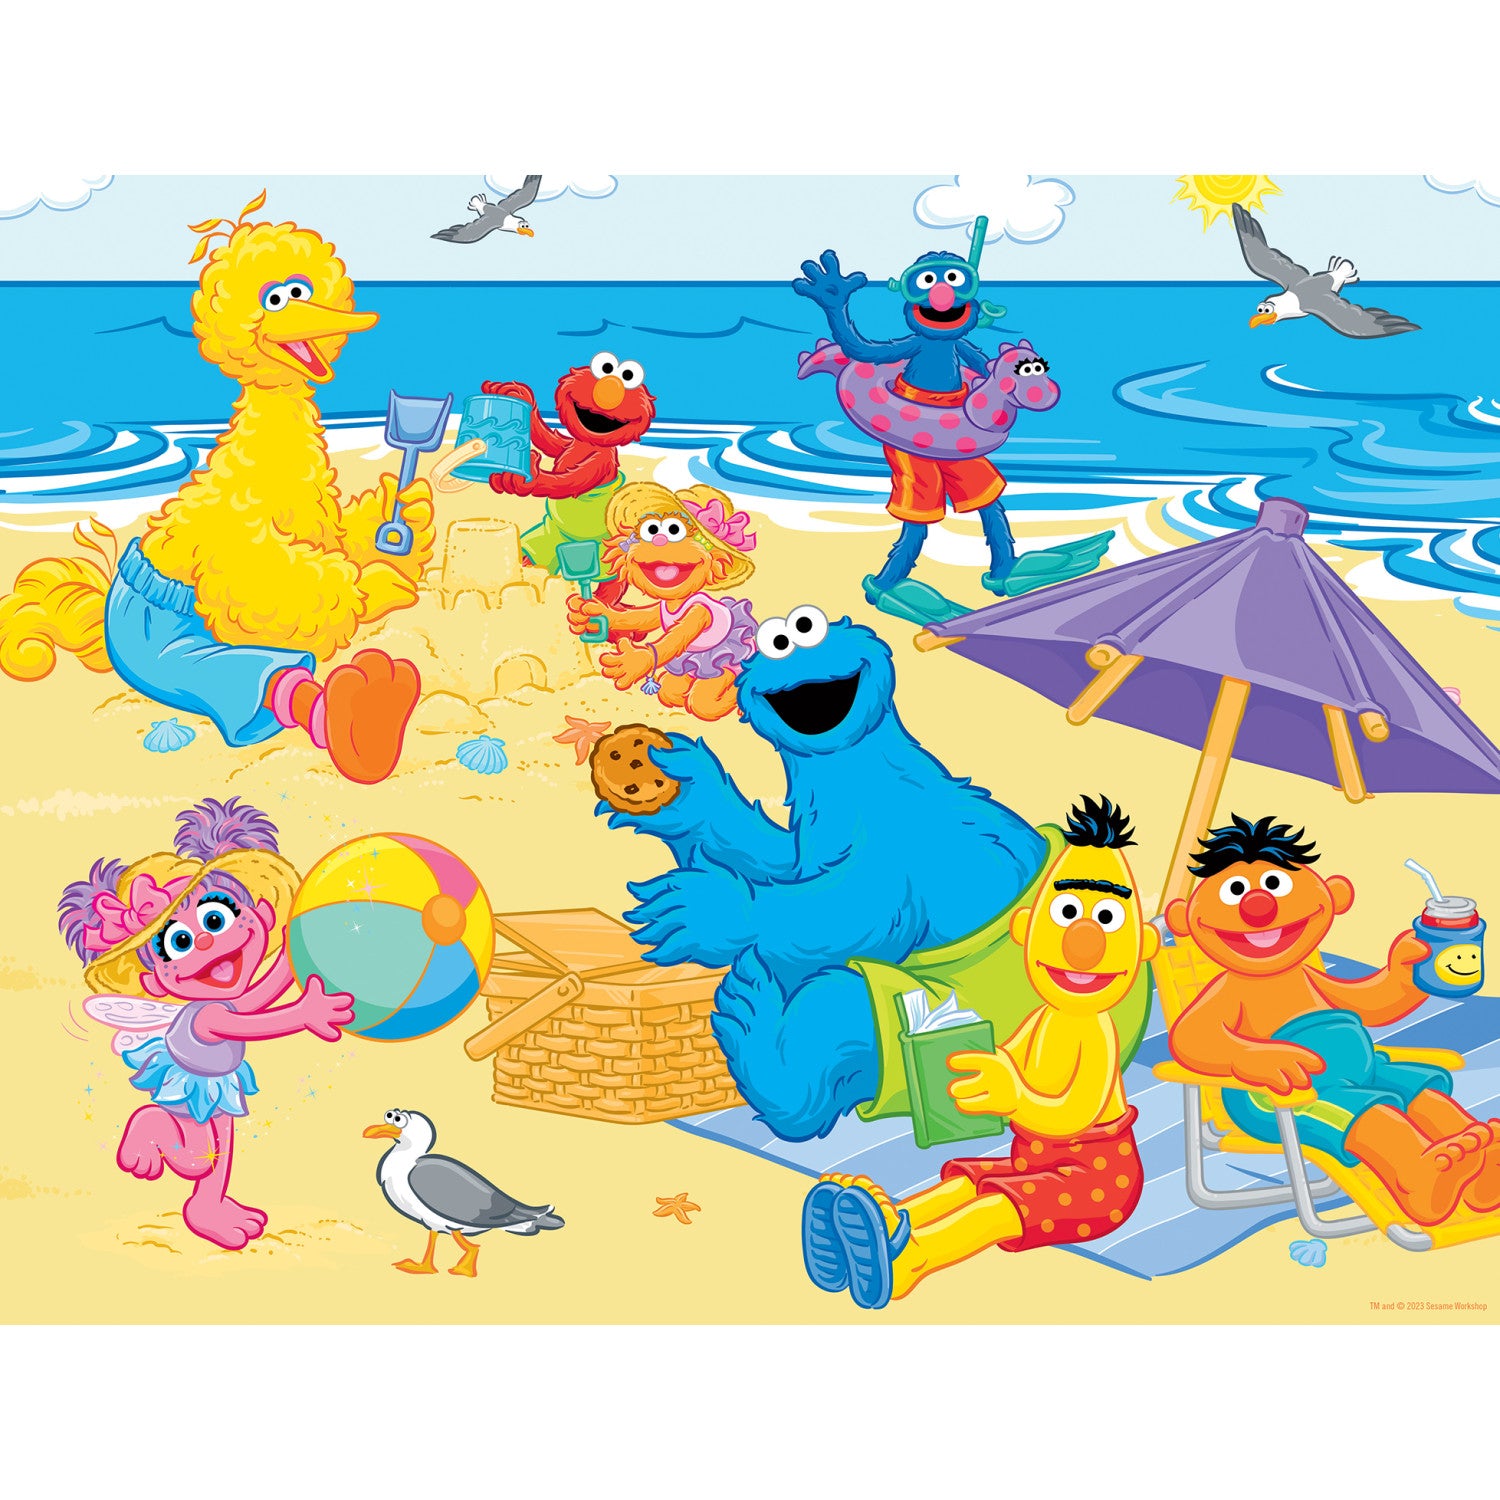 Sesame Street - Beach Day 24 Piece Puzzle